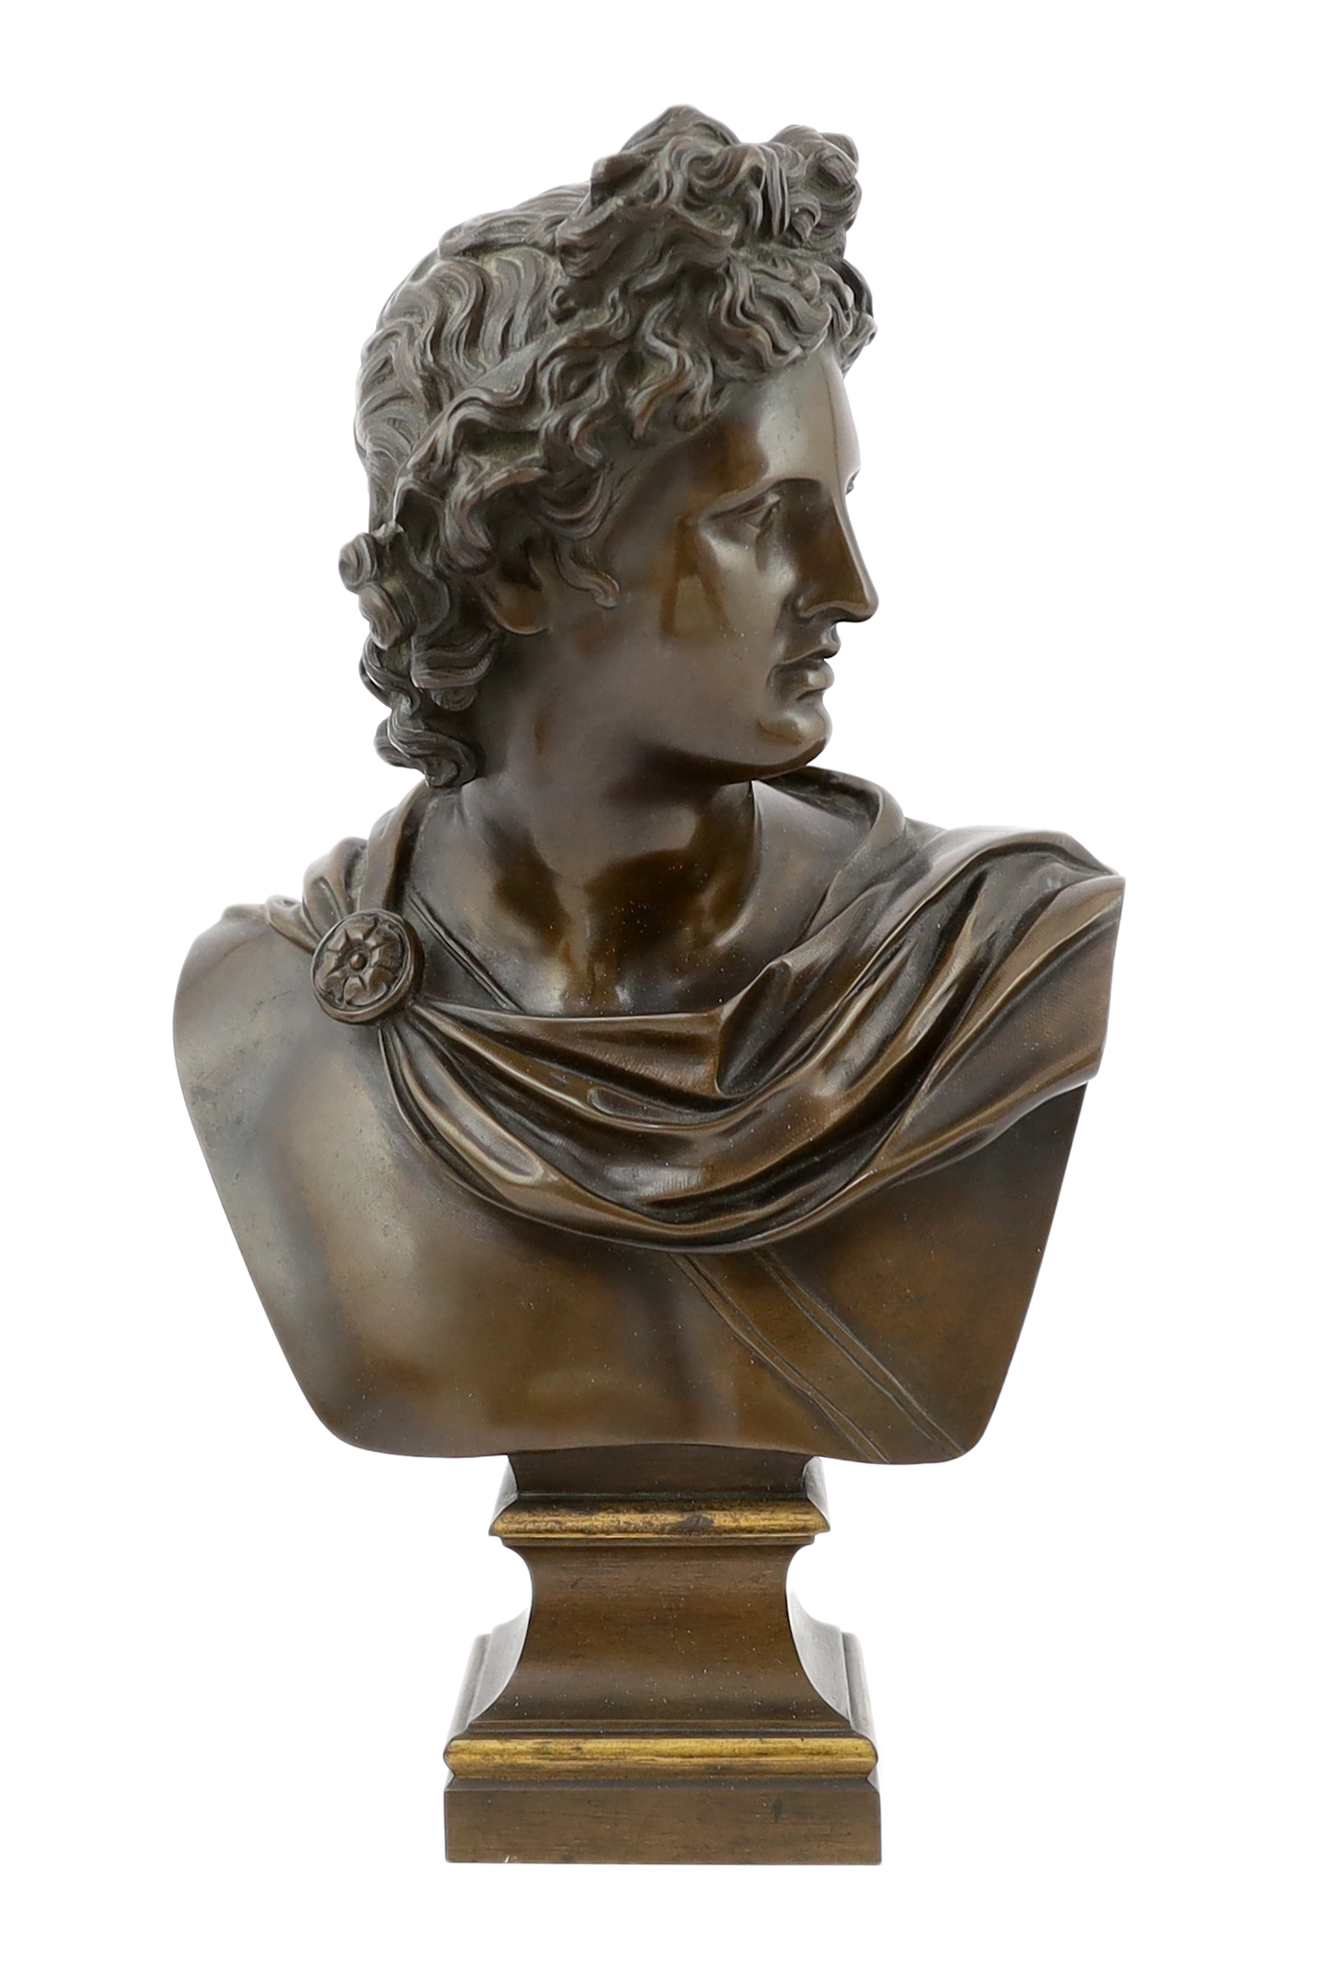 A 19th century Grand Tour bronze bust of Apollo Belvedere, 32cm high                                                                                                                                                        